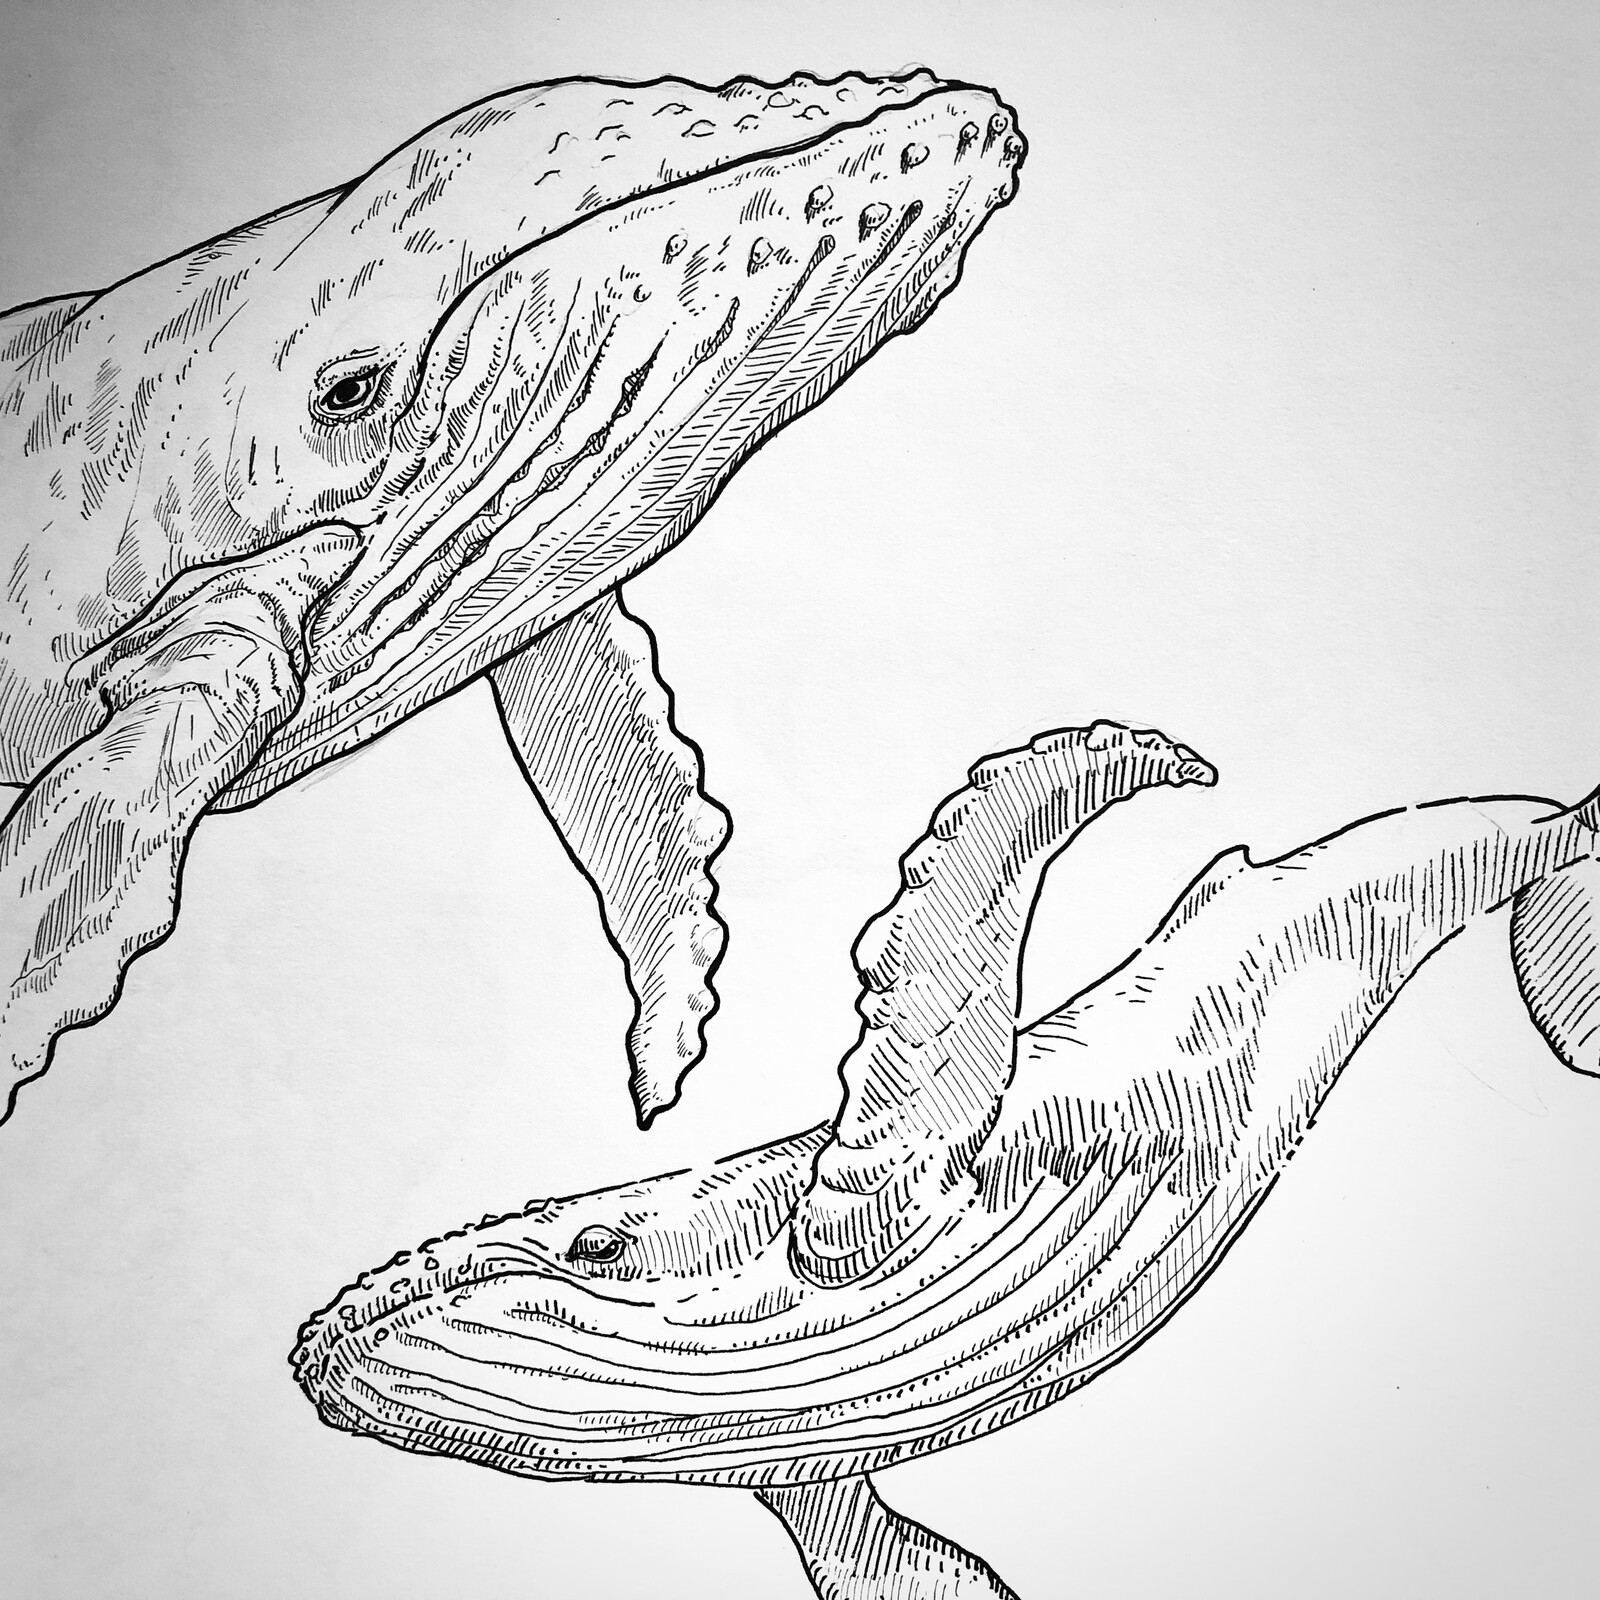 Soft animal - Whales